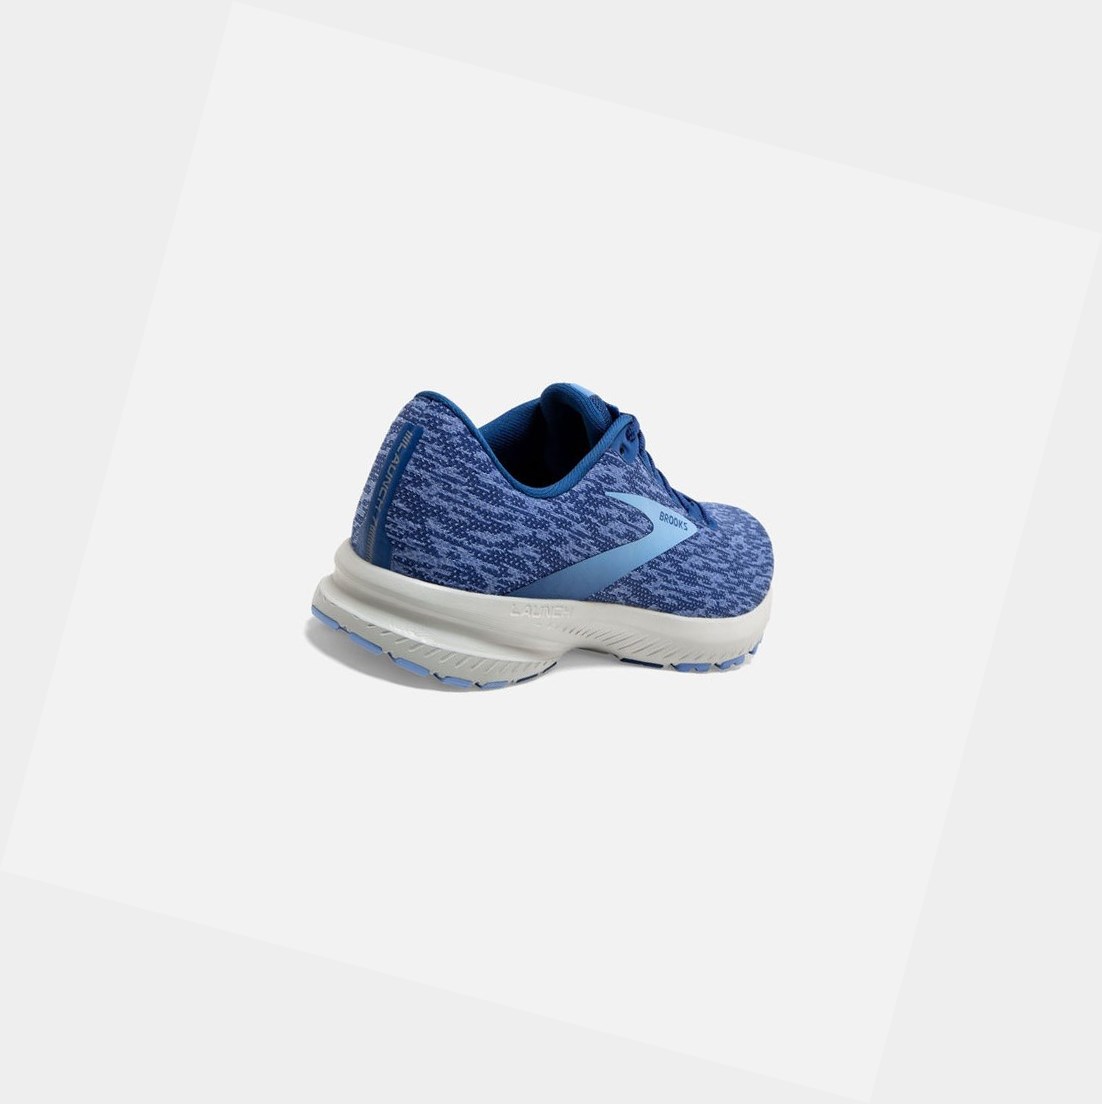 Brooks Launch 7 Women's Road Running Shoes Blue / Dazzling Blue / Cornflower | RHFU-41679